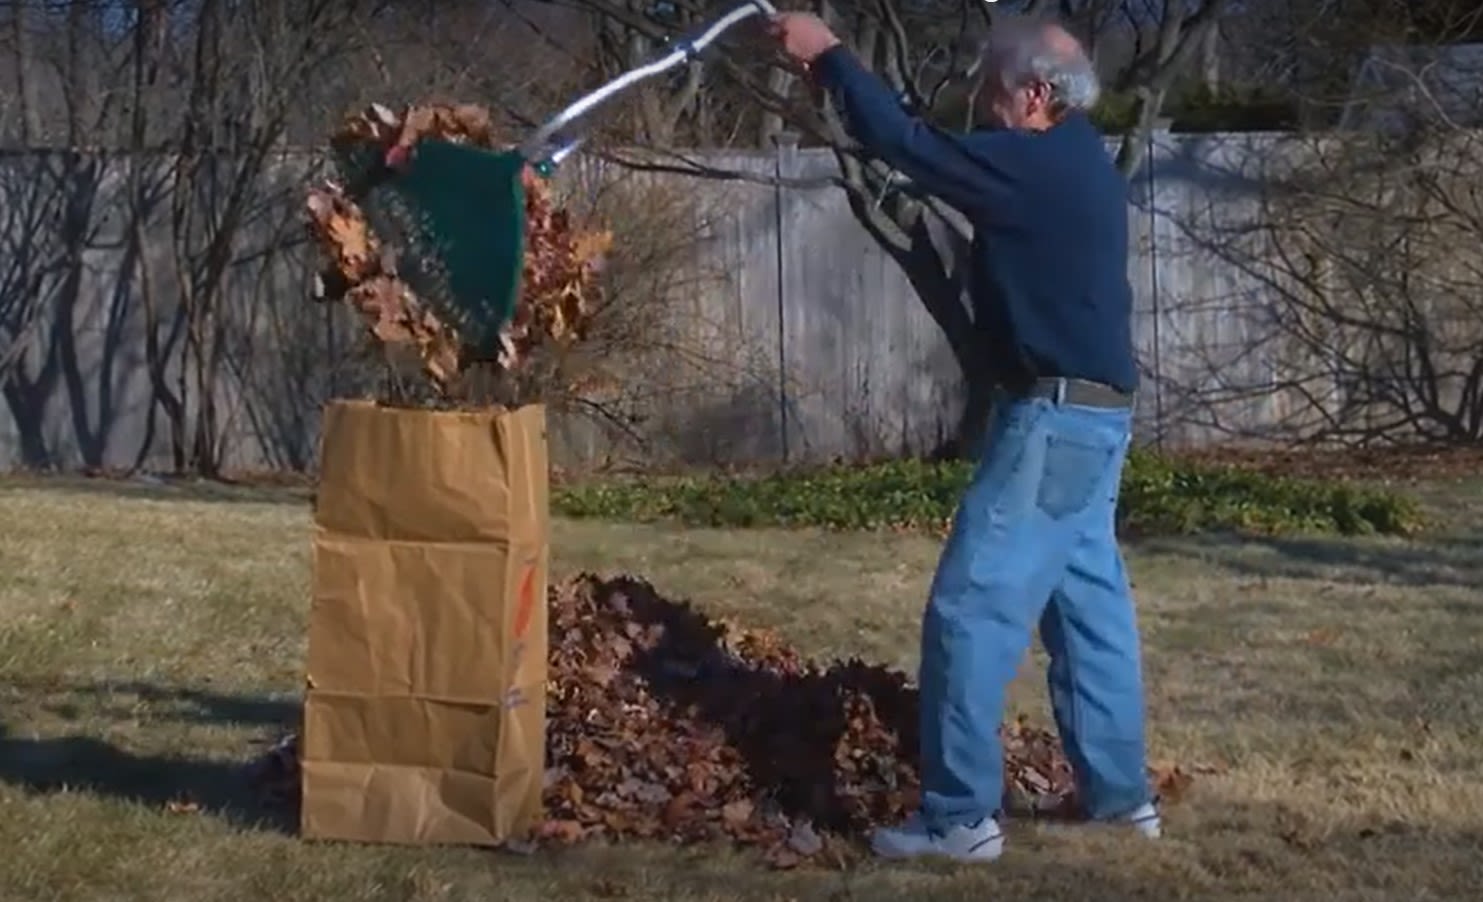 Bruce Feldman, West Hartford man killed in Deep River stabbing, was inventor of new rake